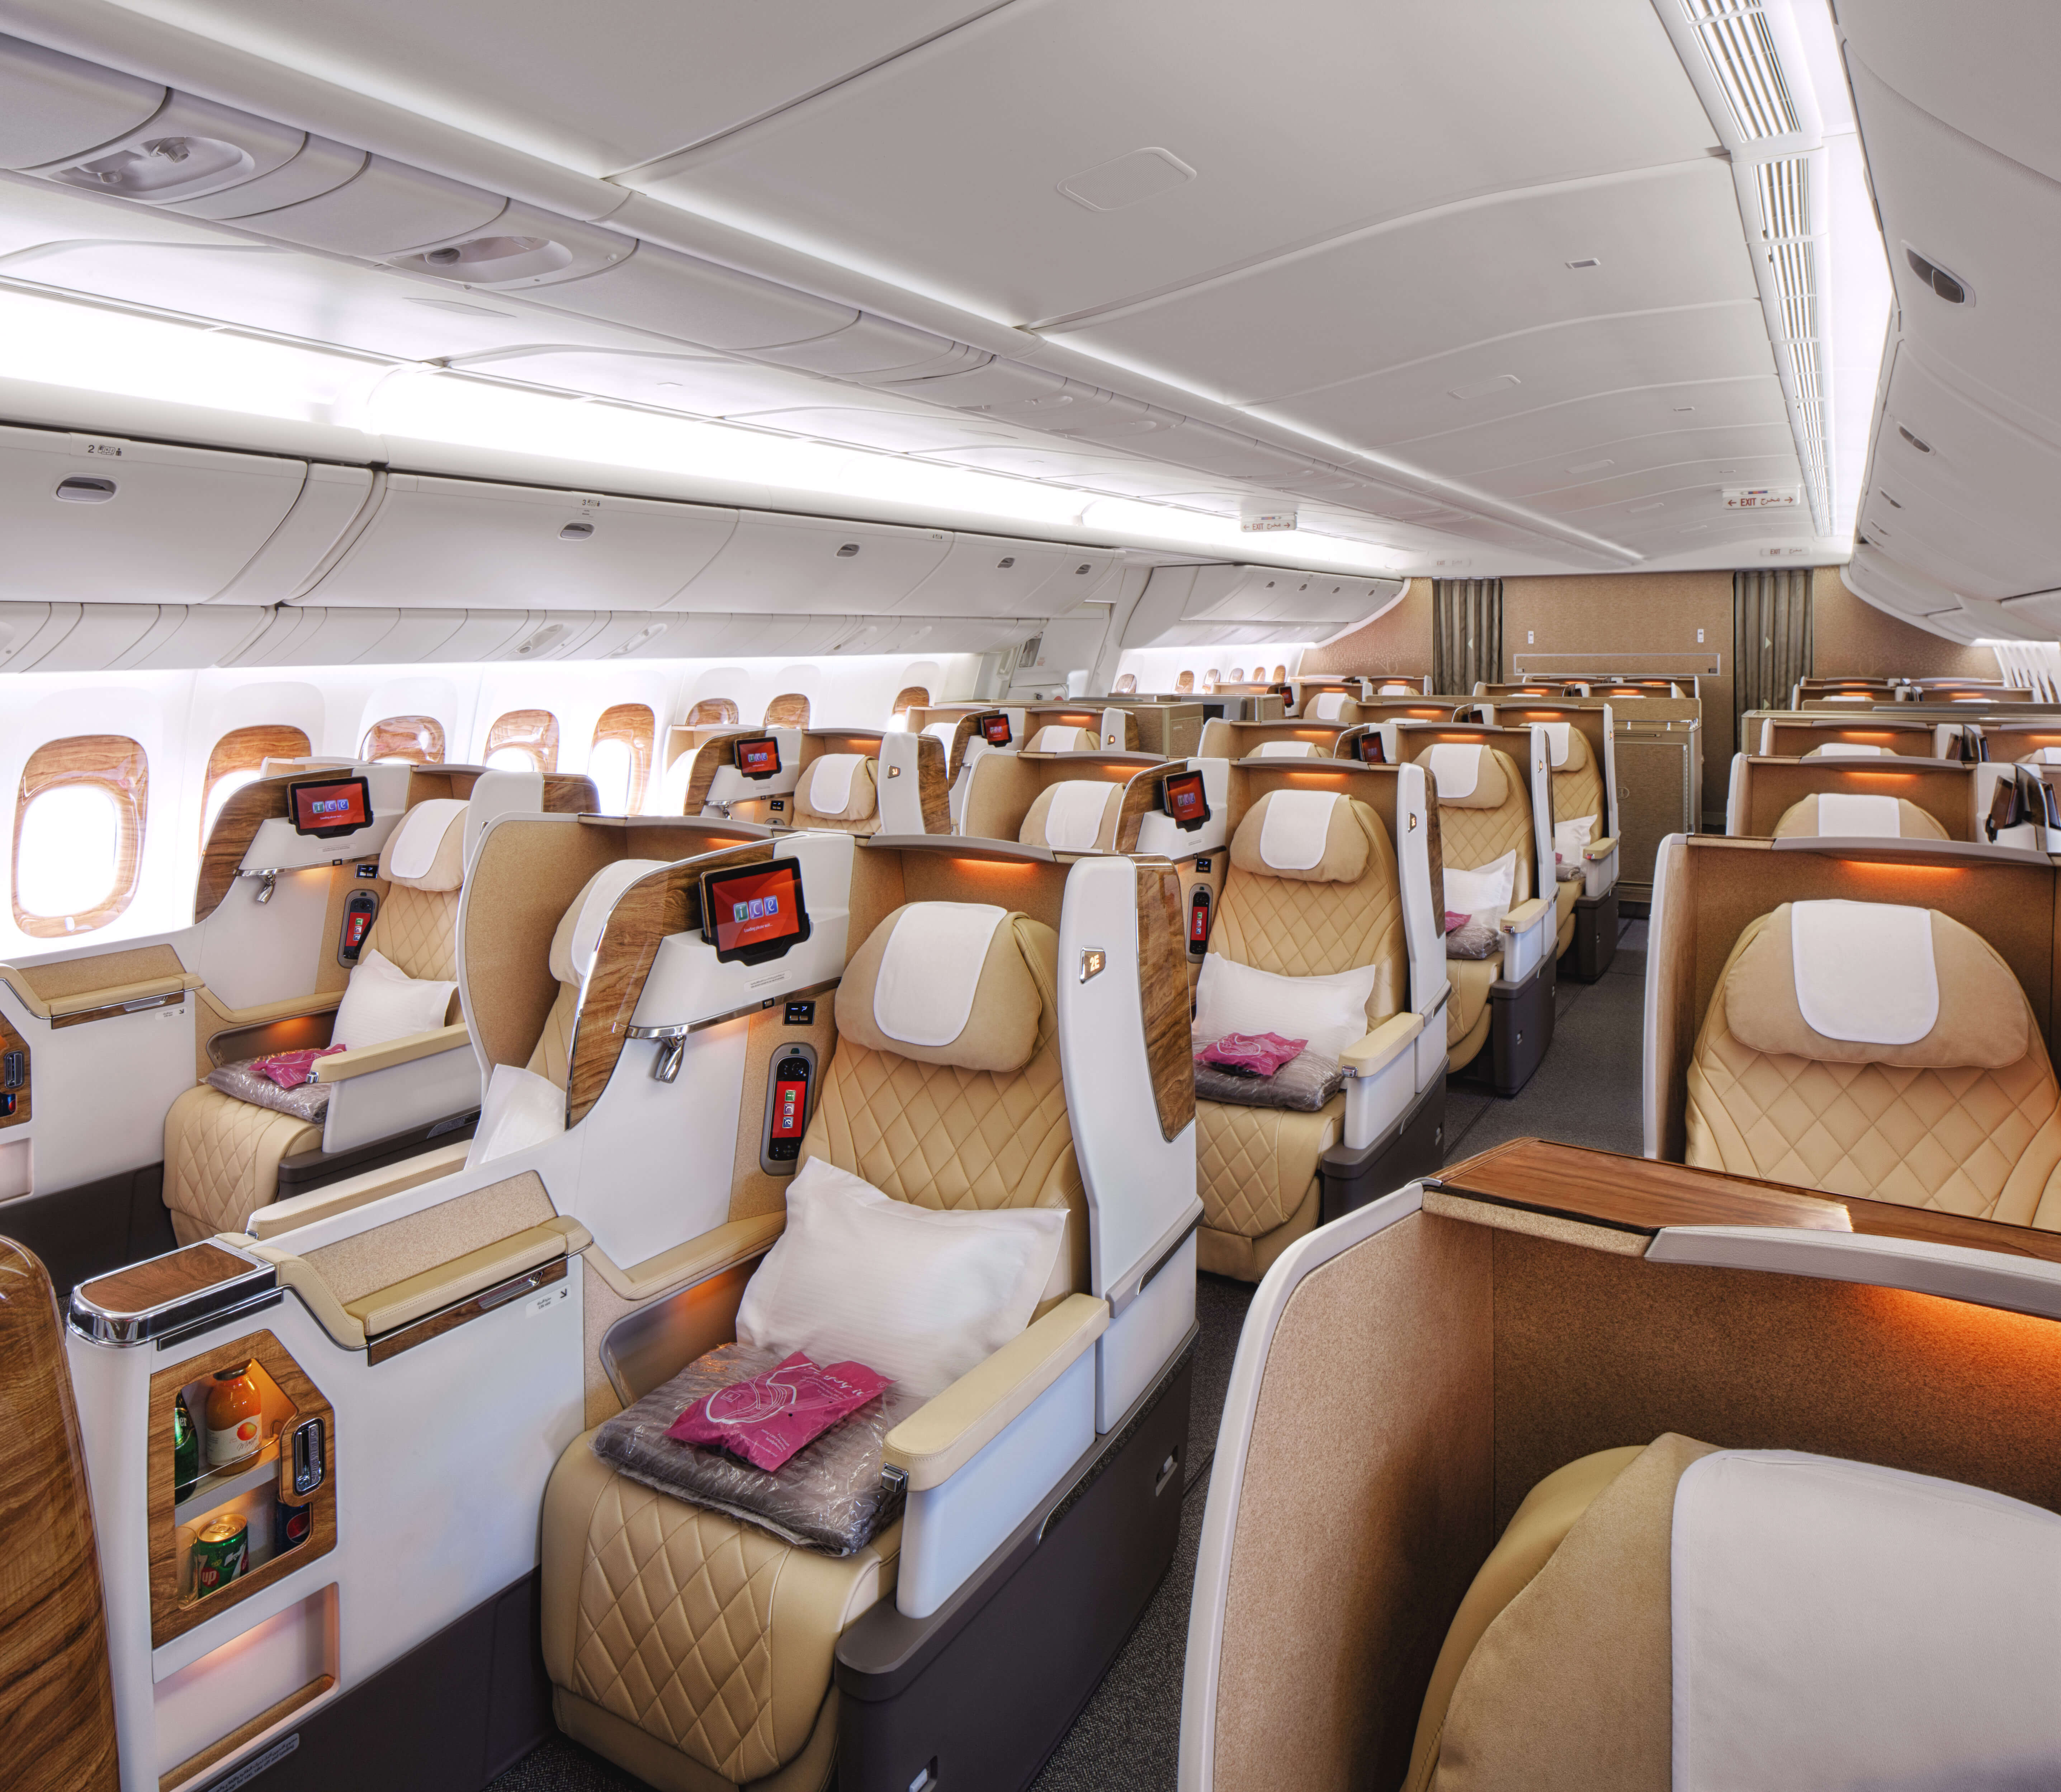 Emirates refurbished B777 Business Class 2-2-2 Configuration Seats